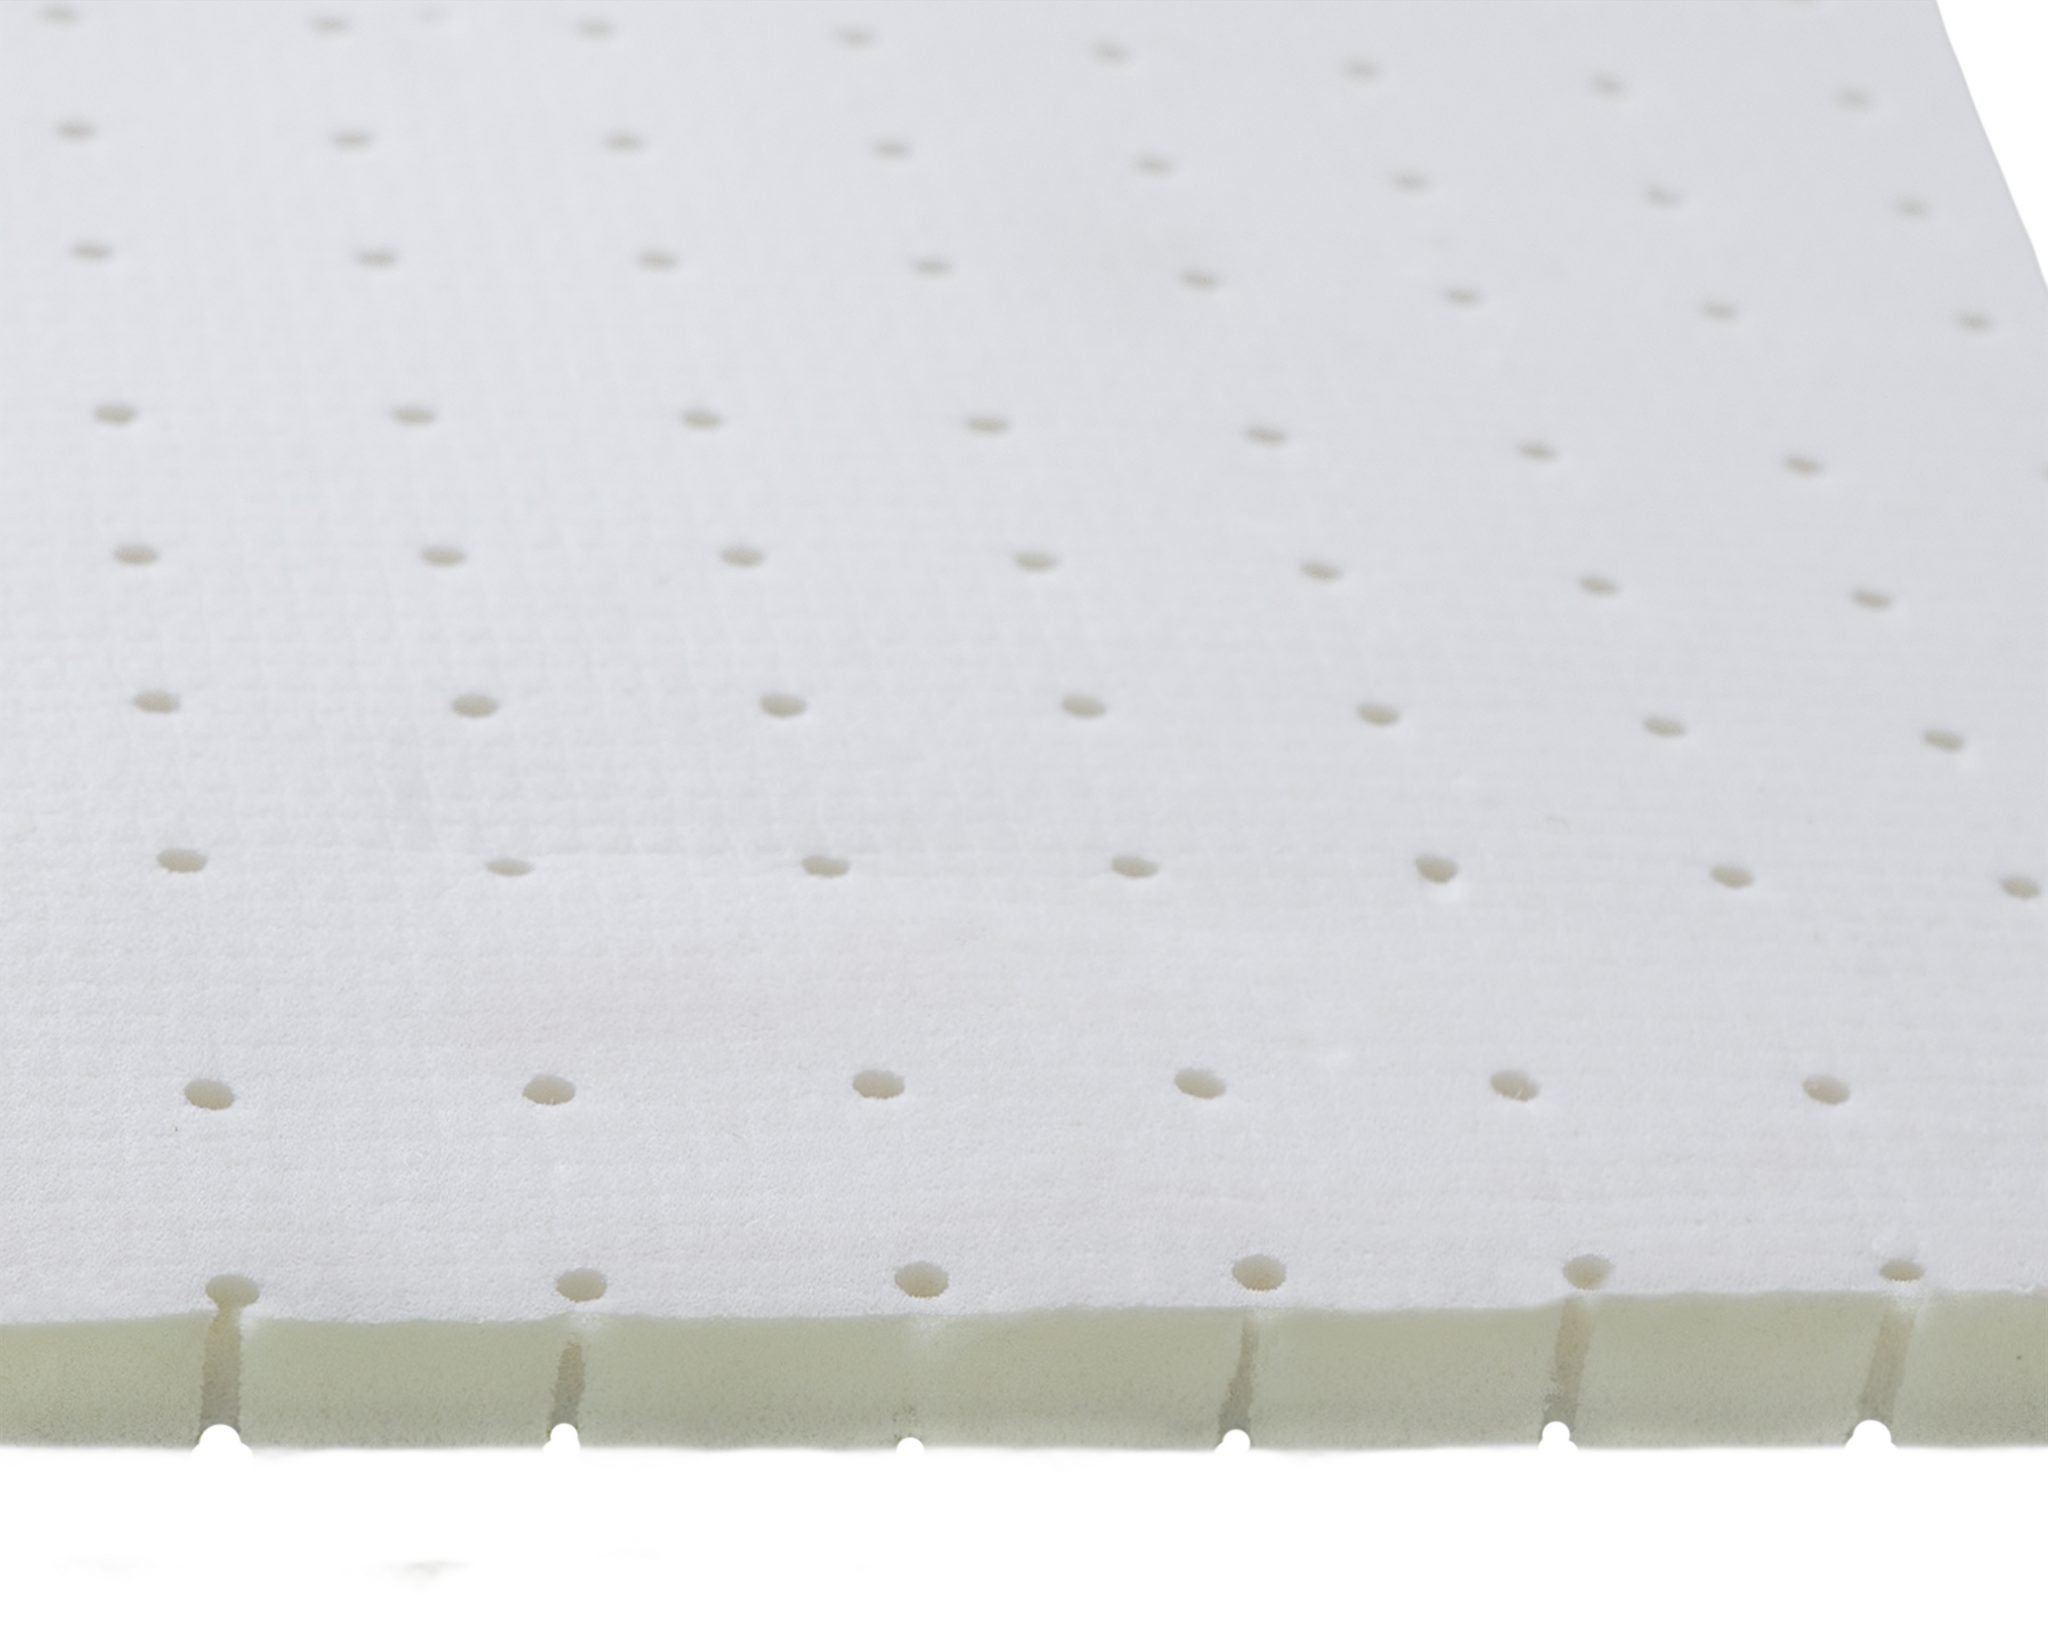 organic foam mattress toronto